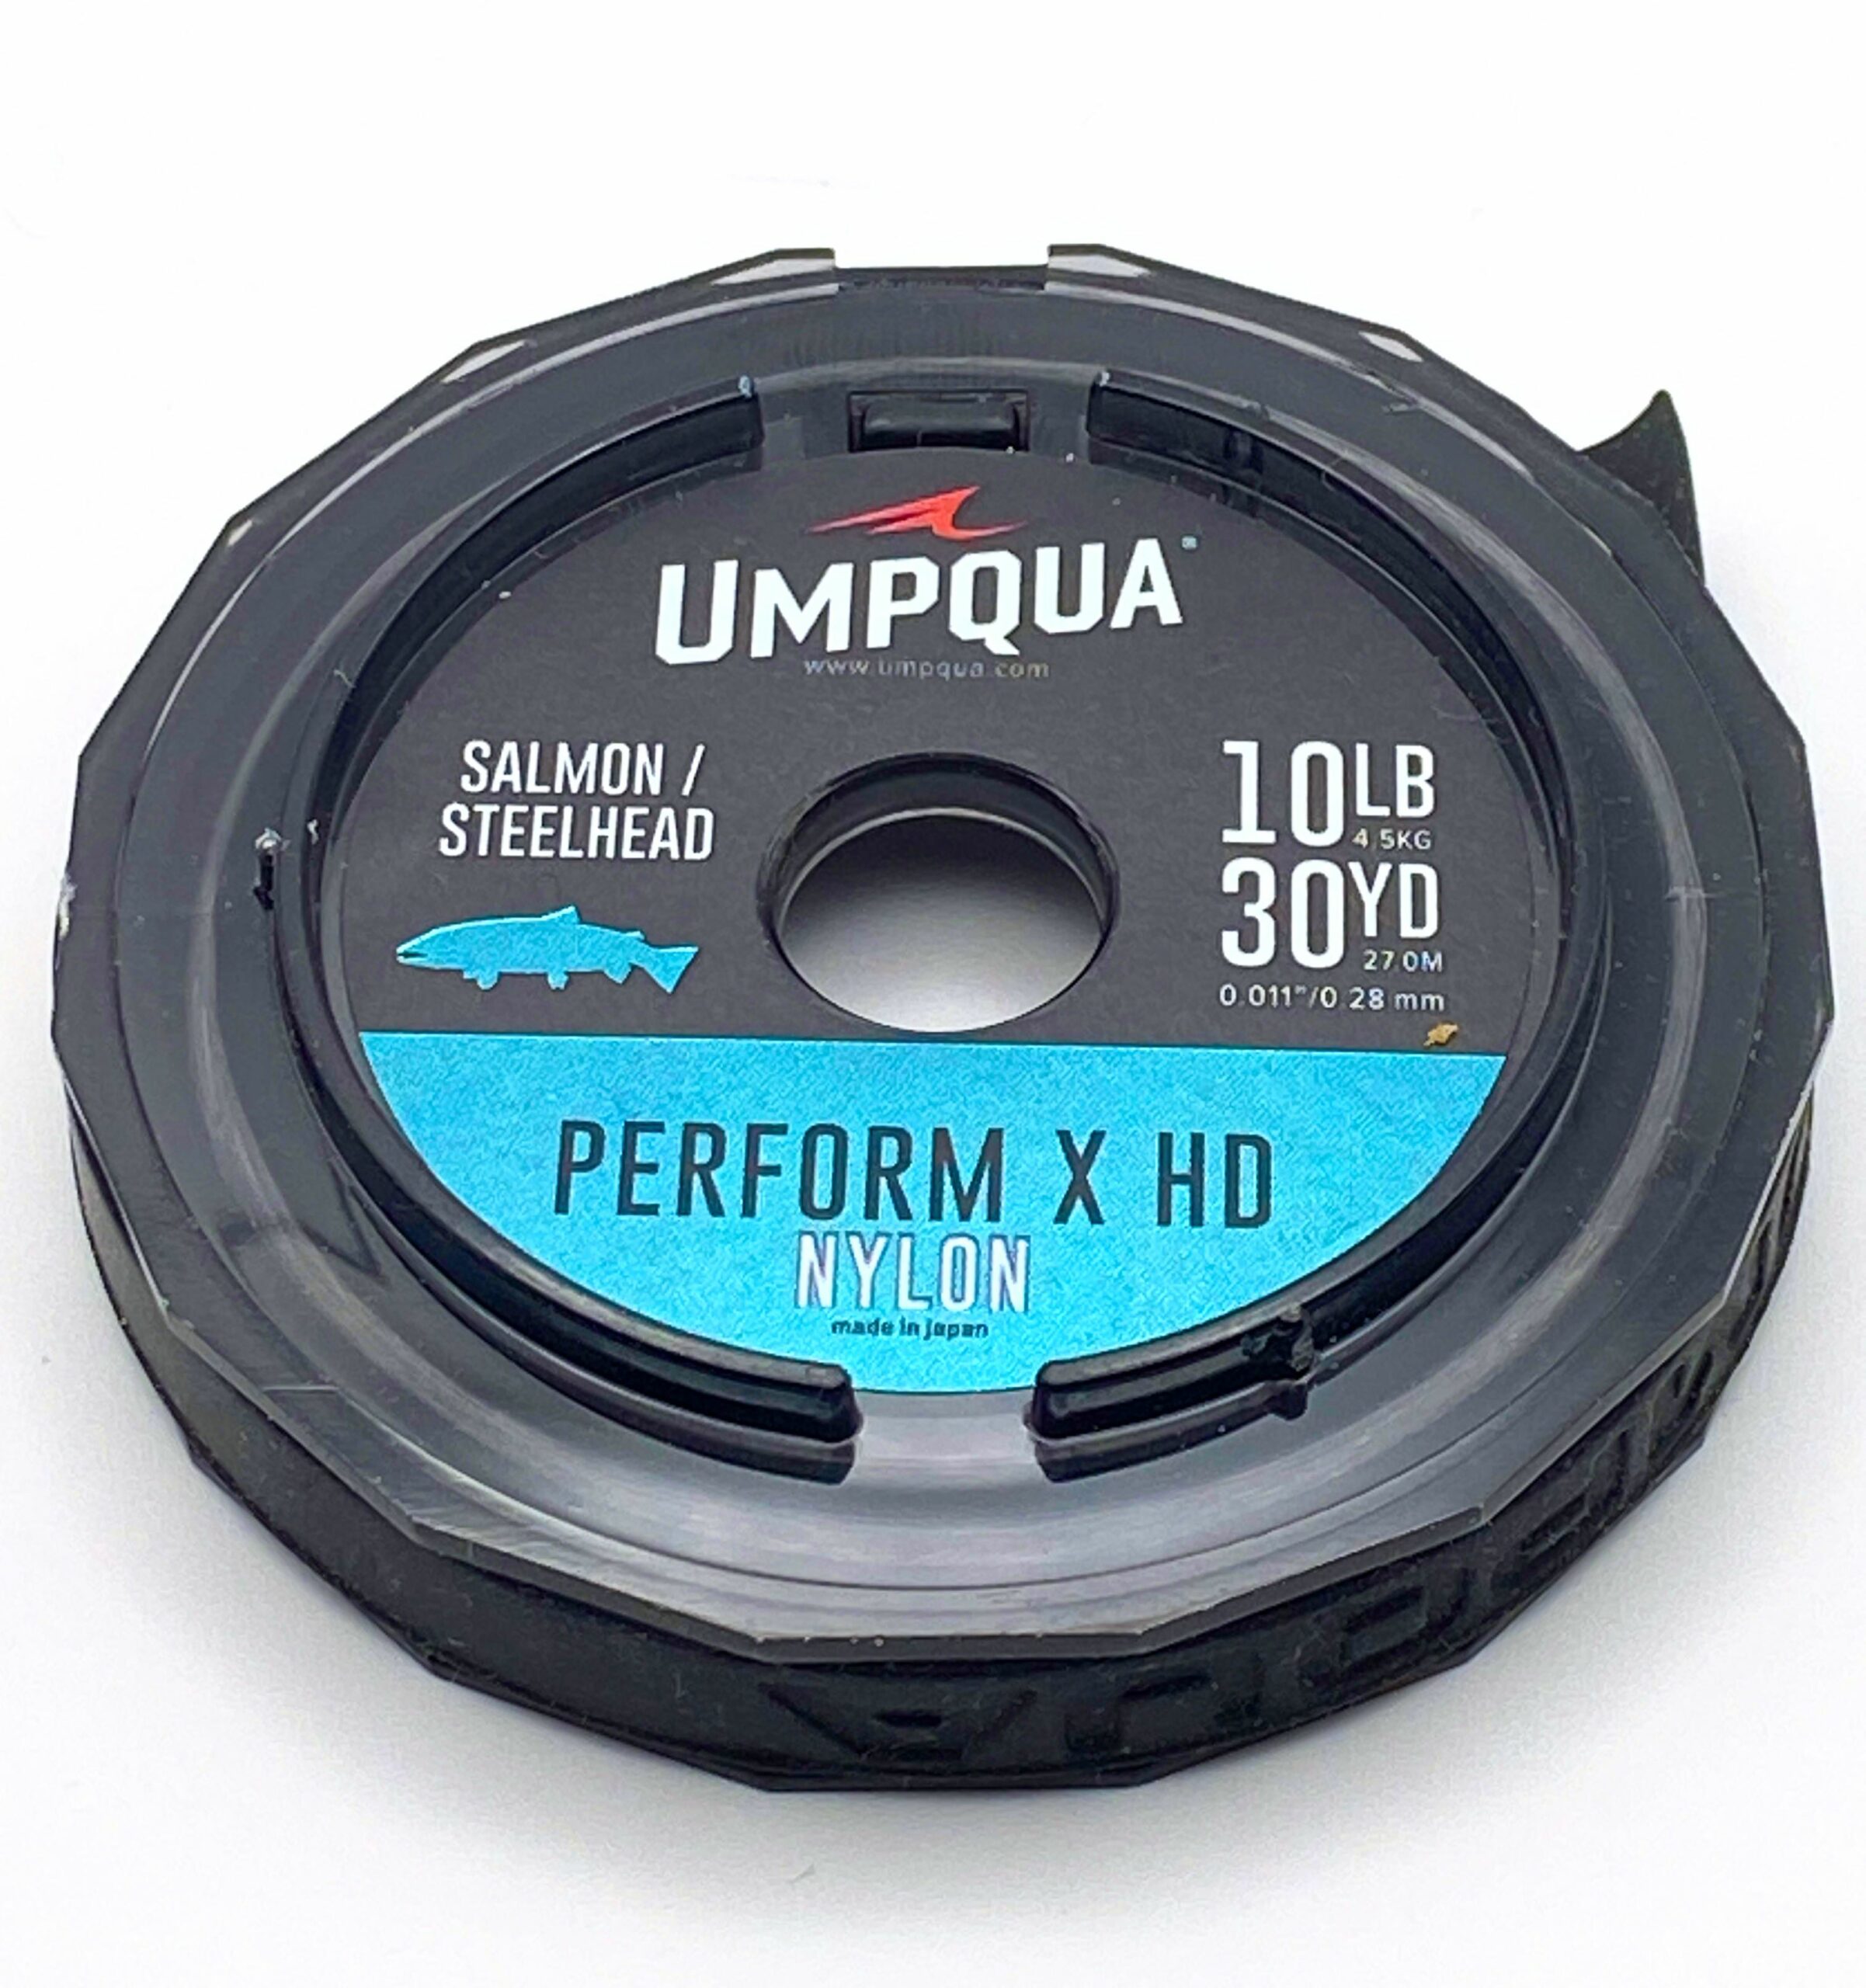 Perform X HD Umpqua tippet 10 LB 30 yards